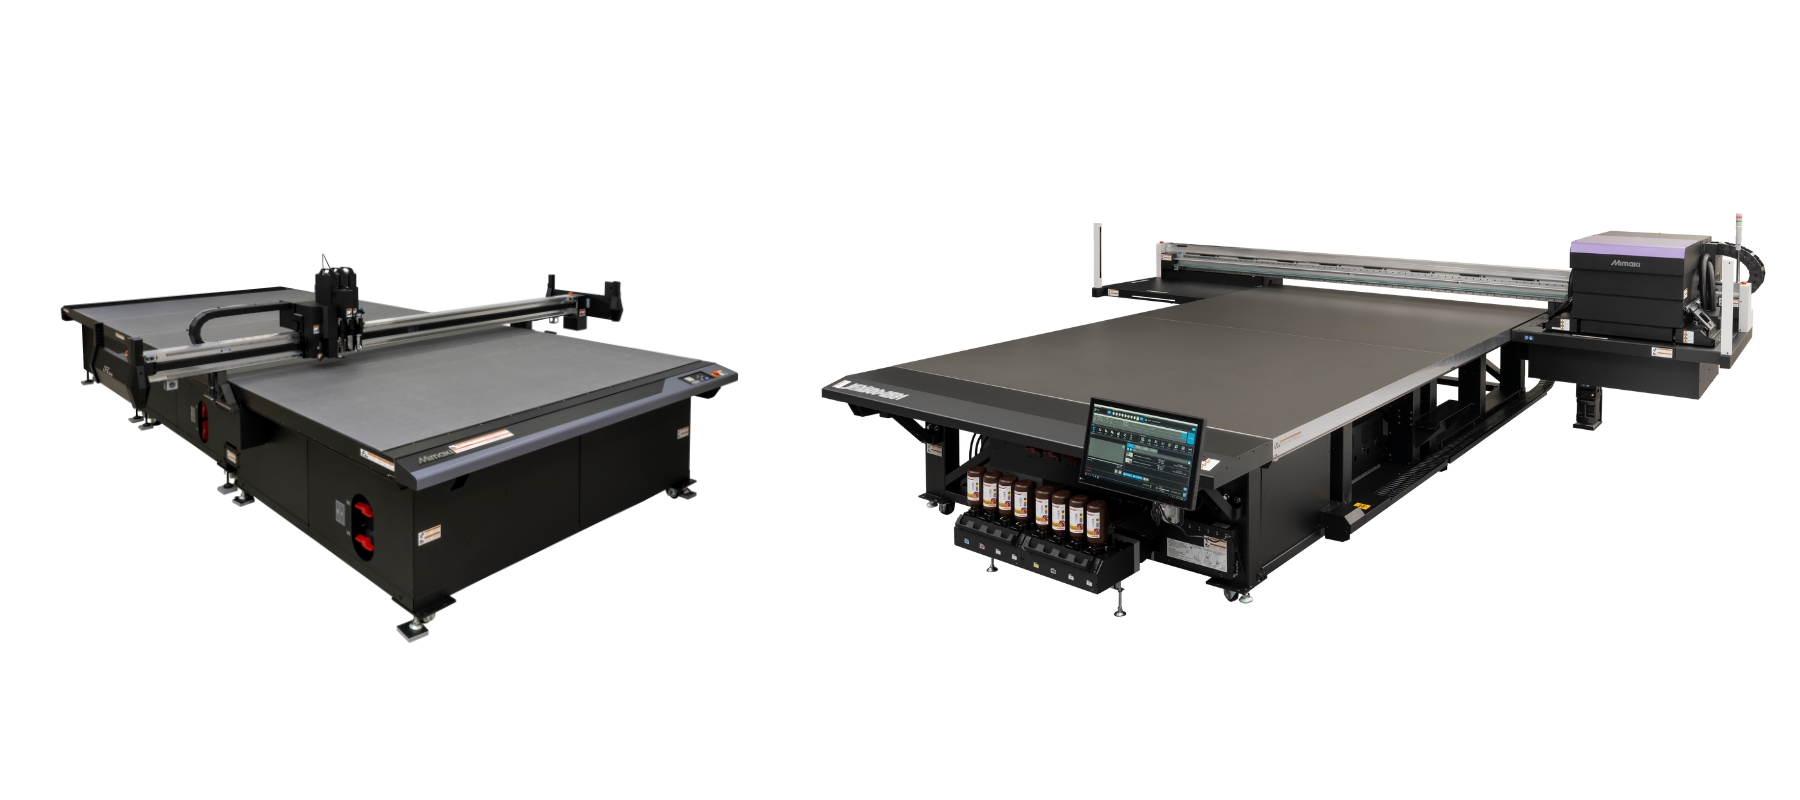 Mimaki CFX-2531 flatbed cutter shown alongside the Mimaki JFX600-2531 grand format flatbed UV printer